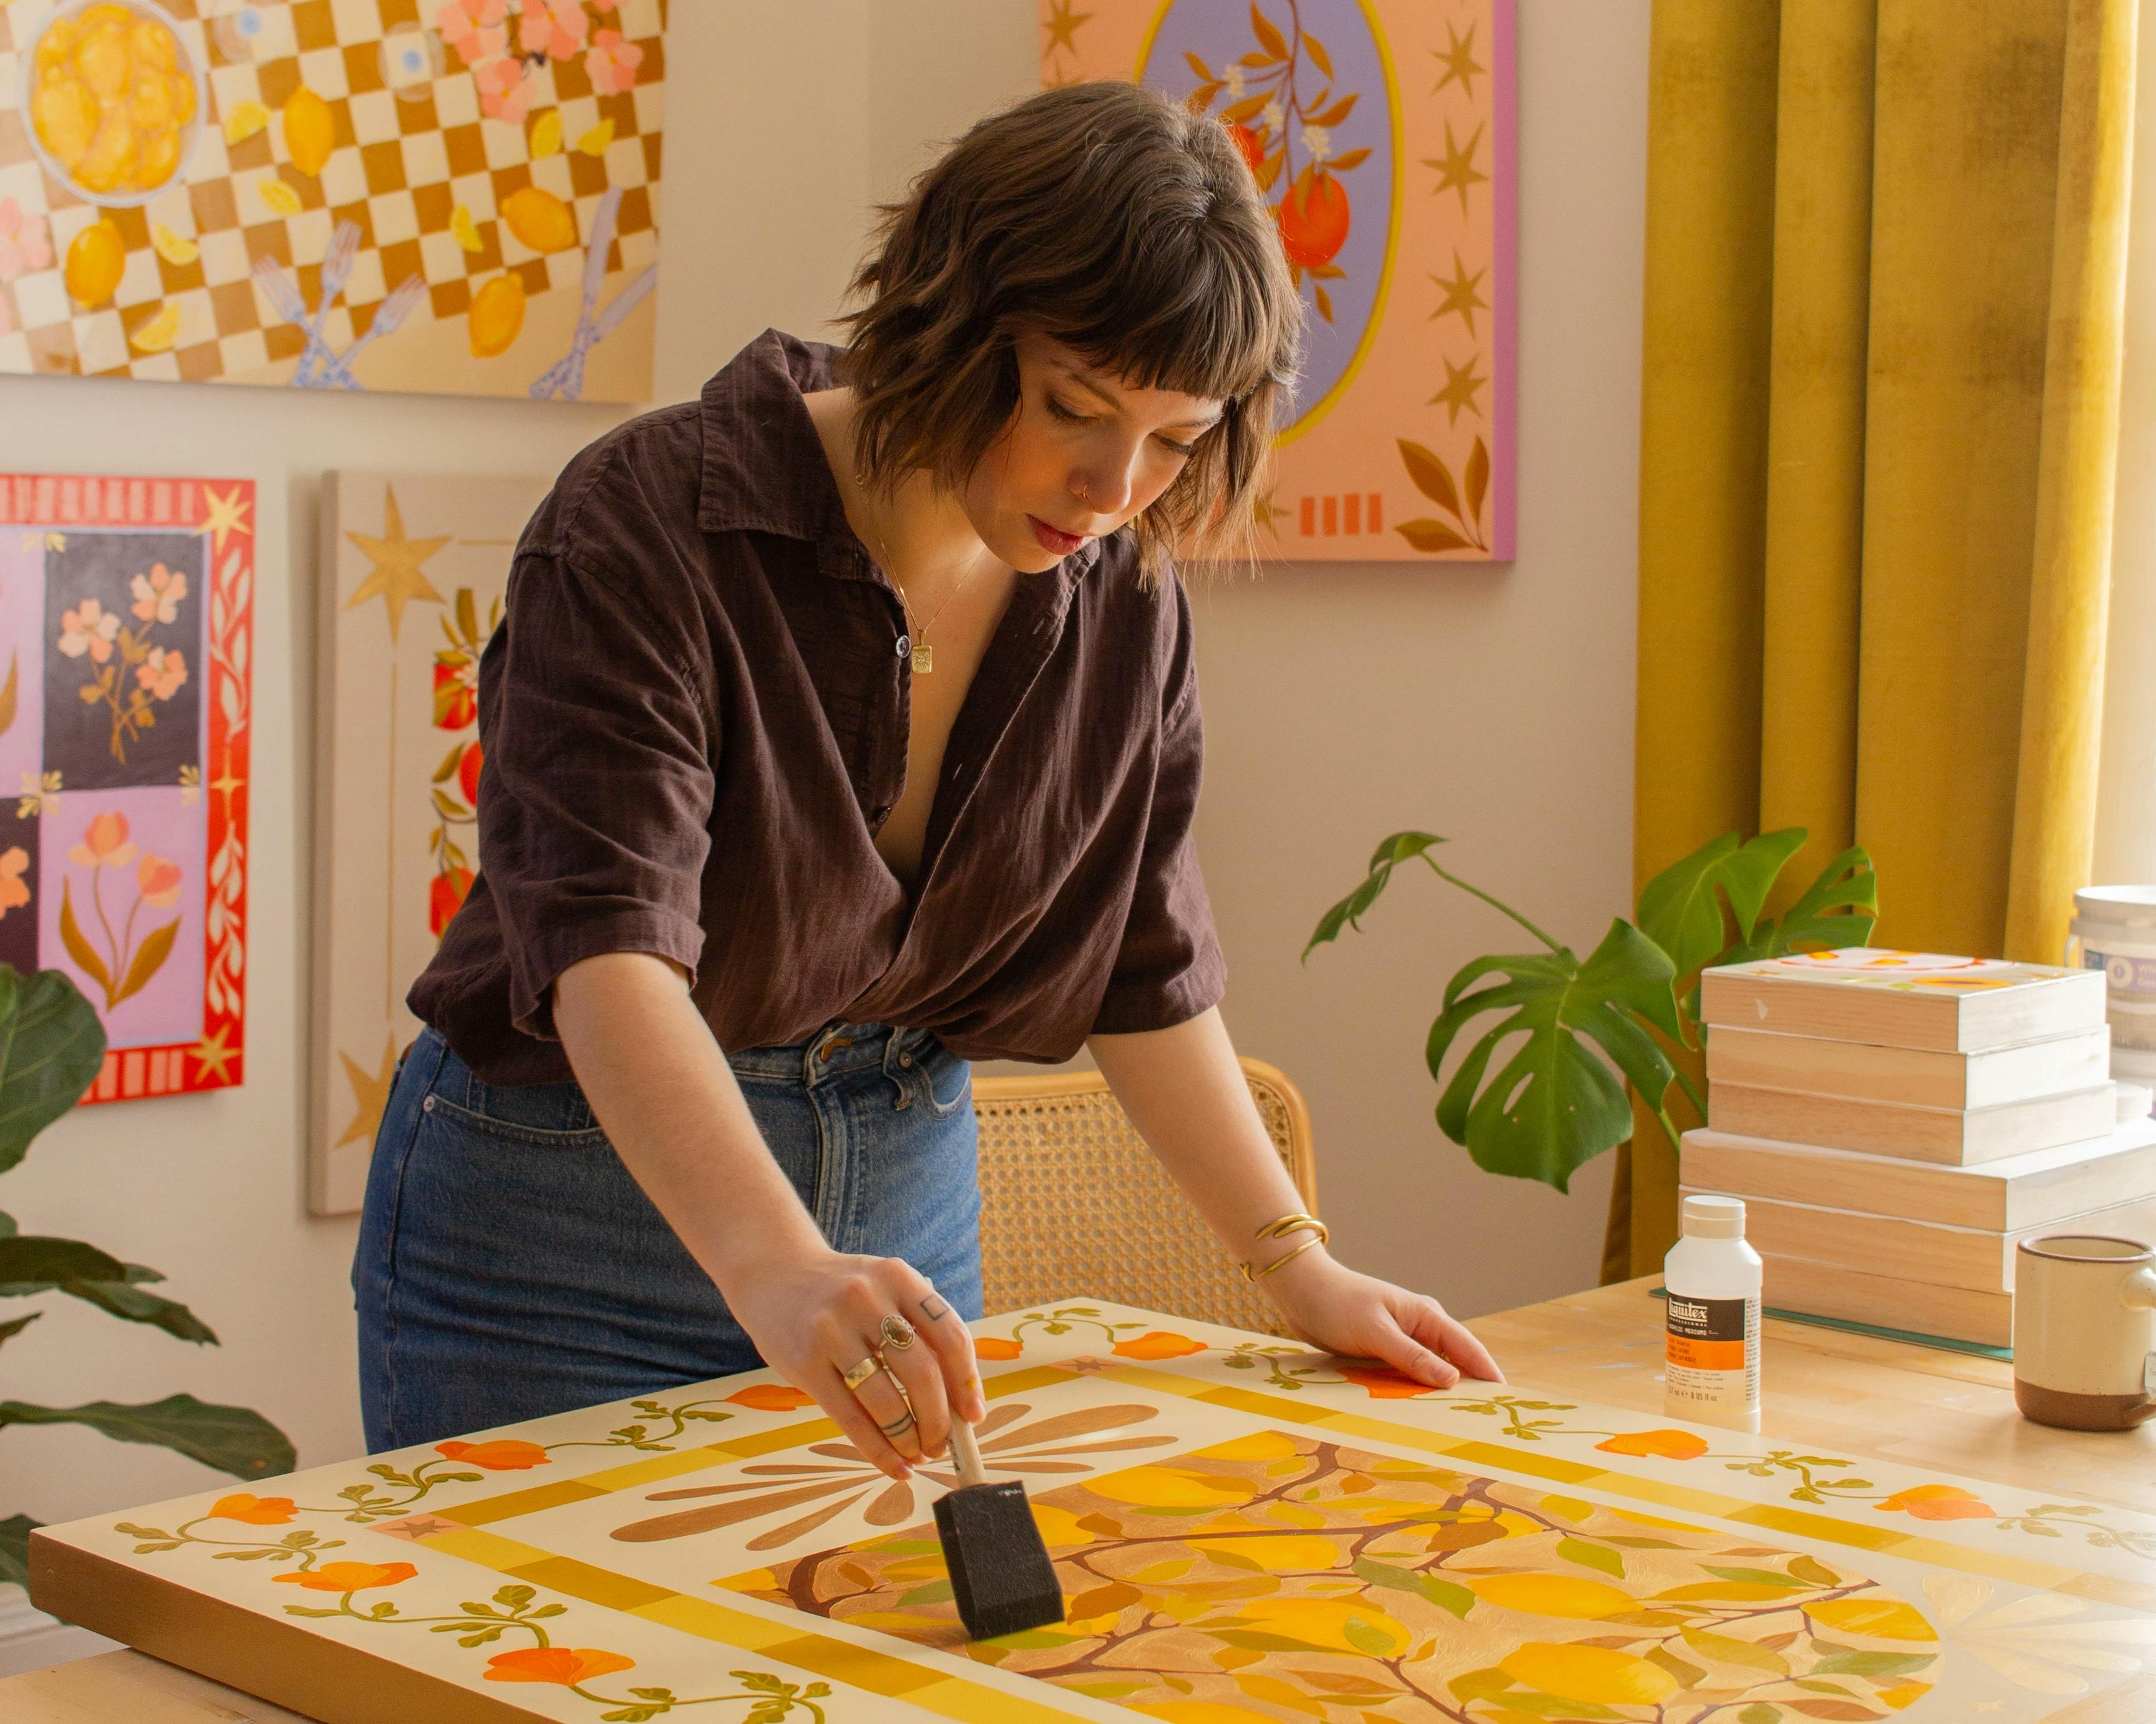 Artist Haley Elise Hughes paints in her studio.